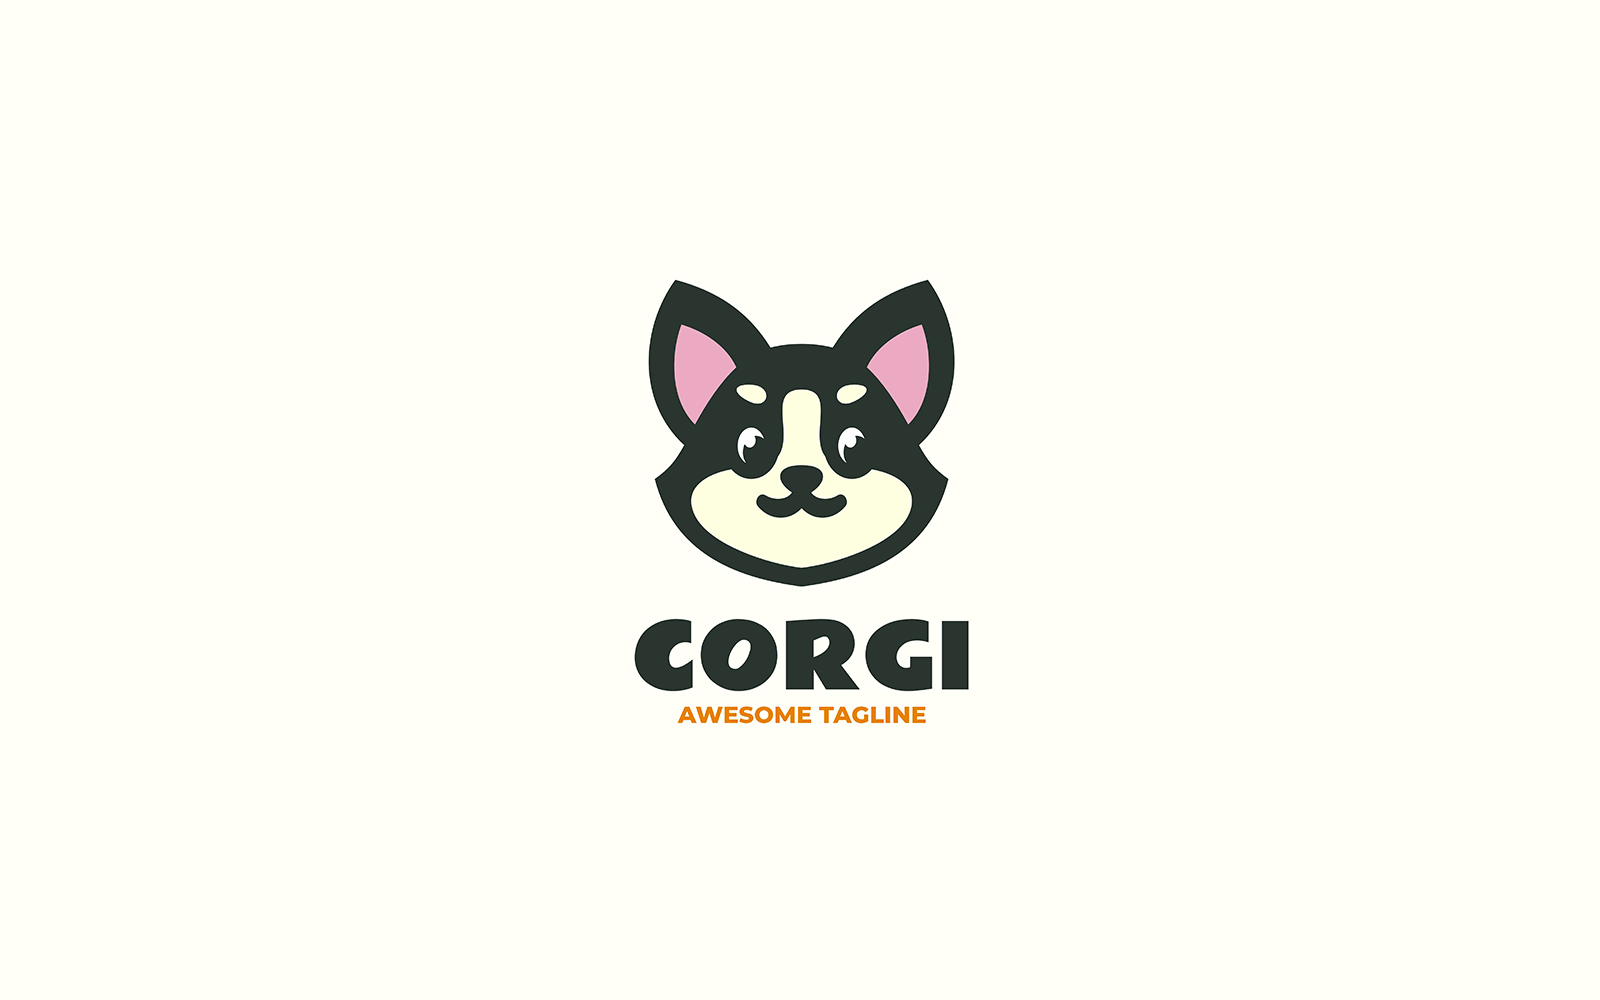 Corgi Dog Mascot Cartoon Logo 2